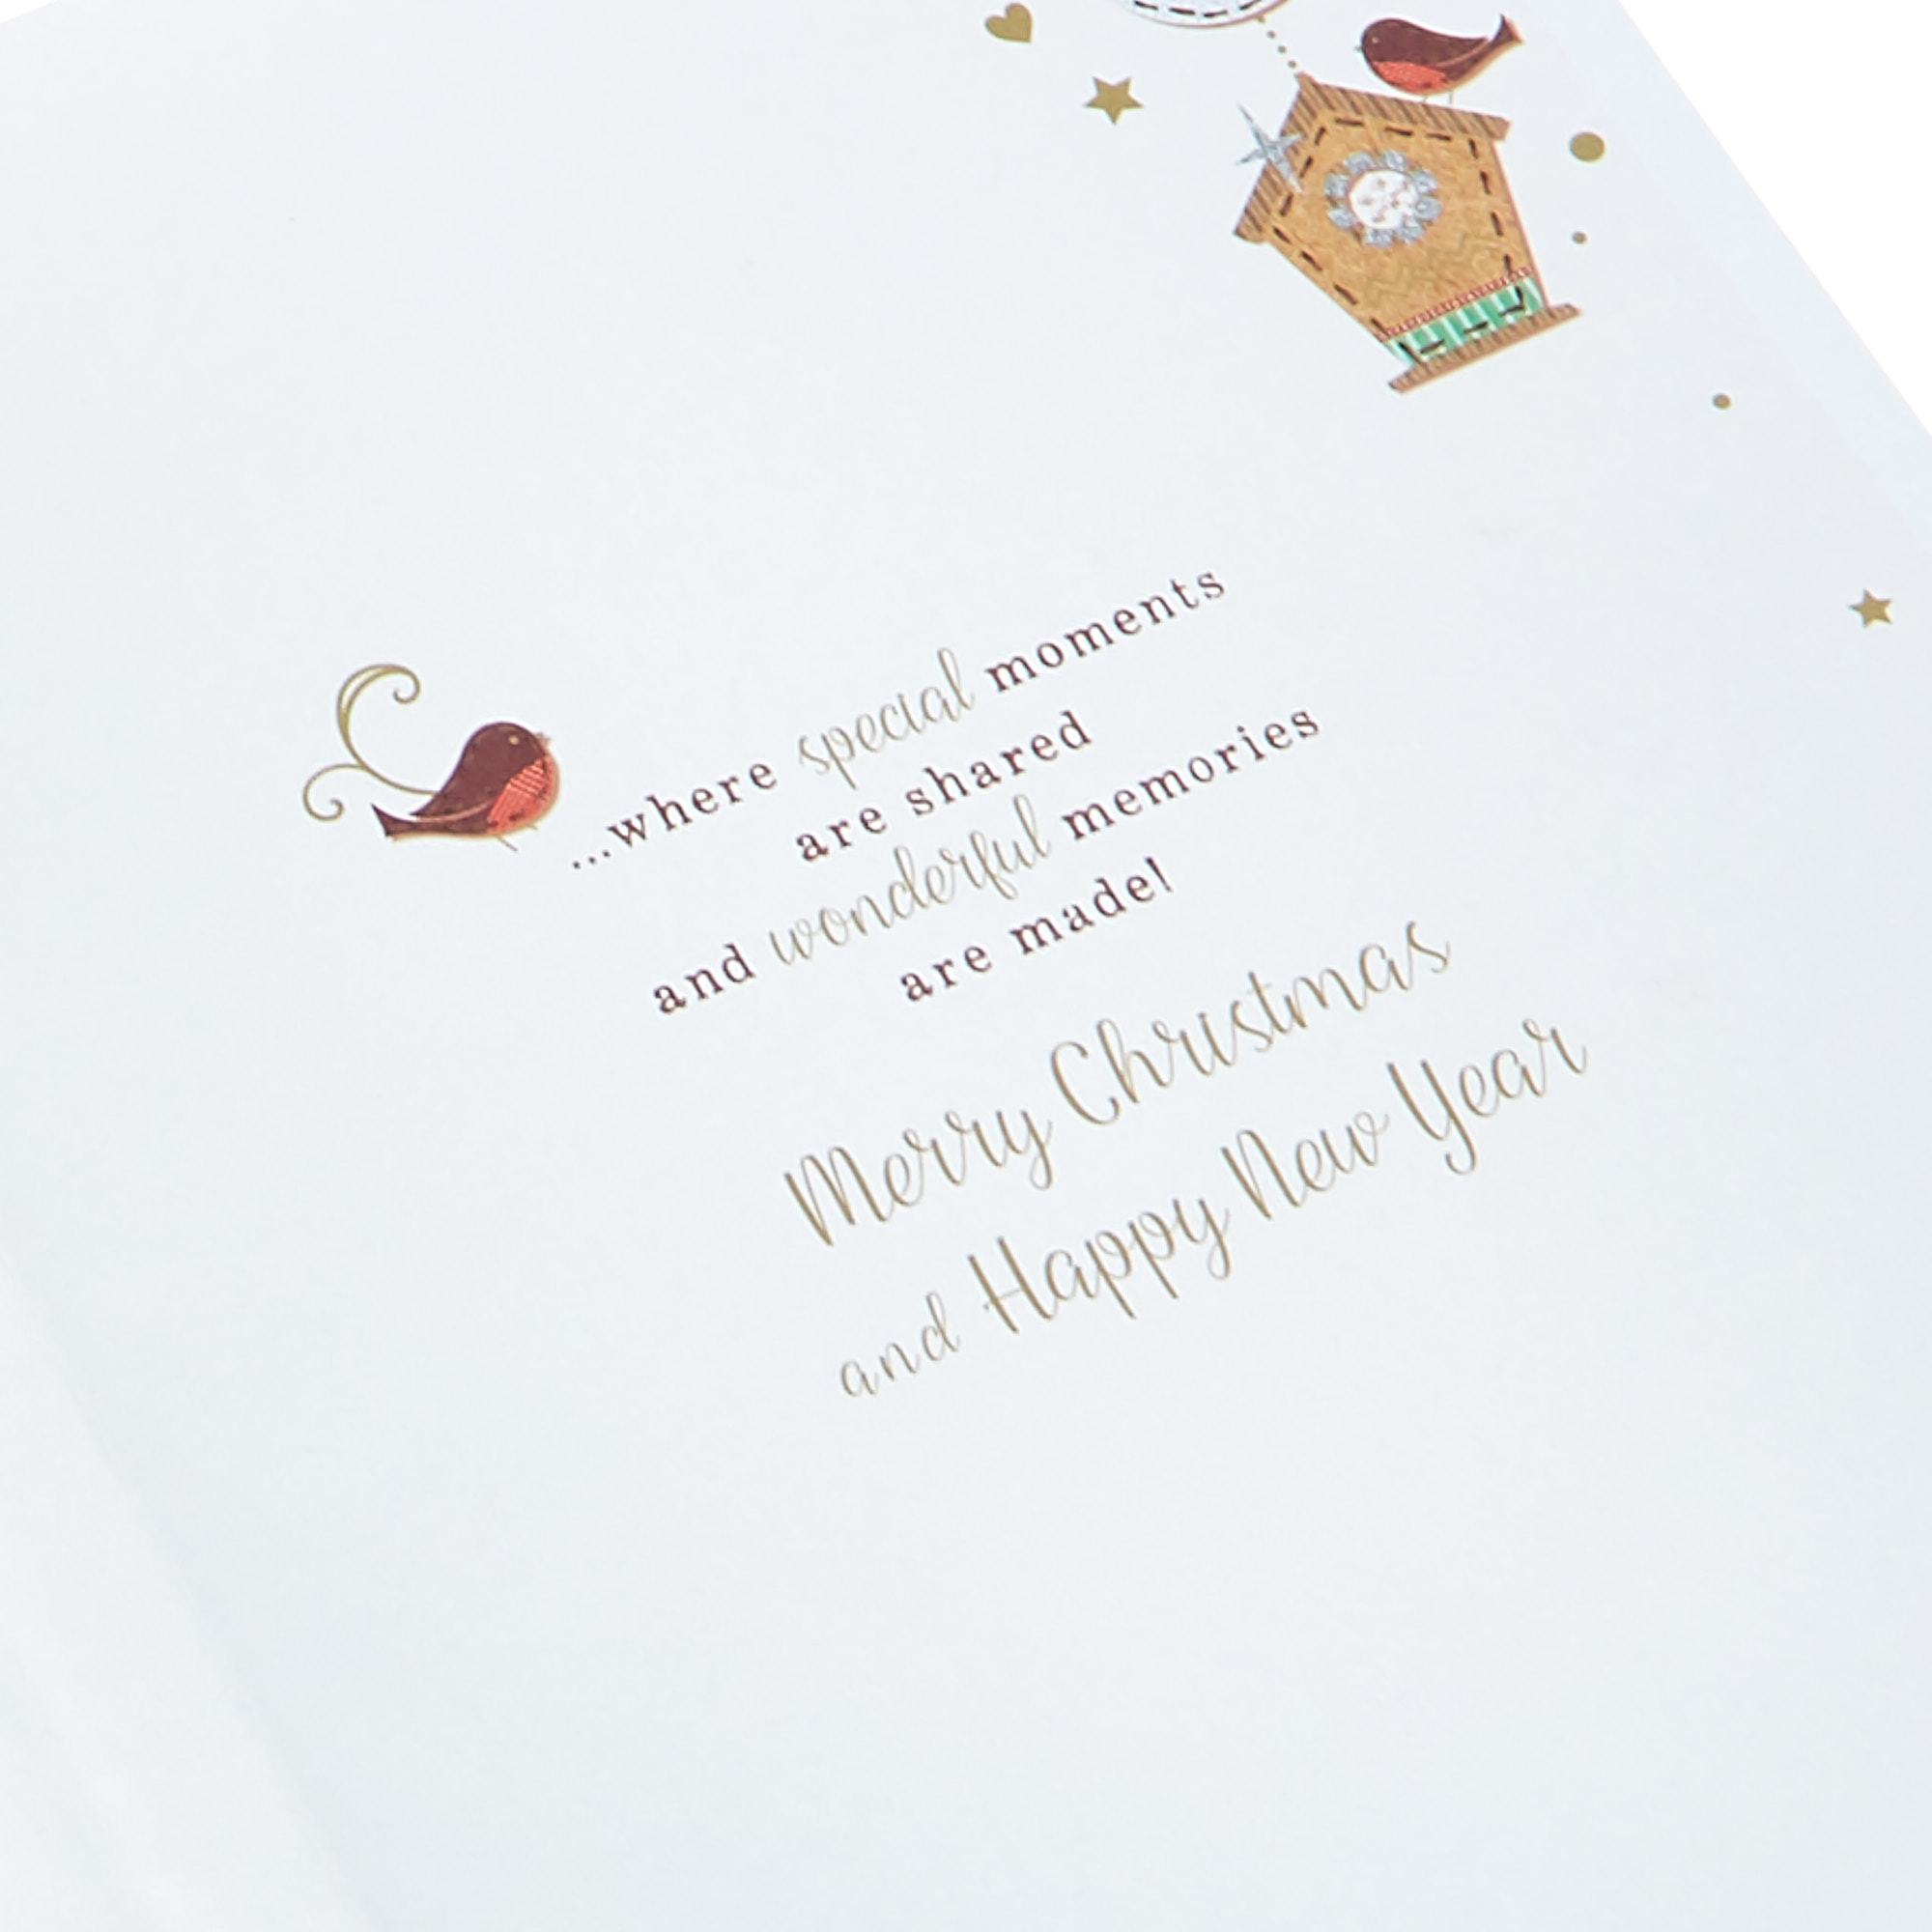 Christmas Card - Both Of You, Have A Magical Christmas